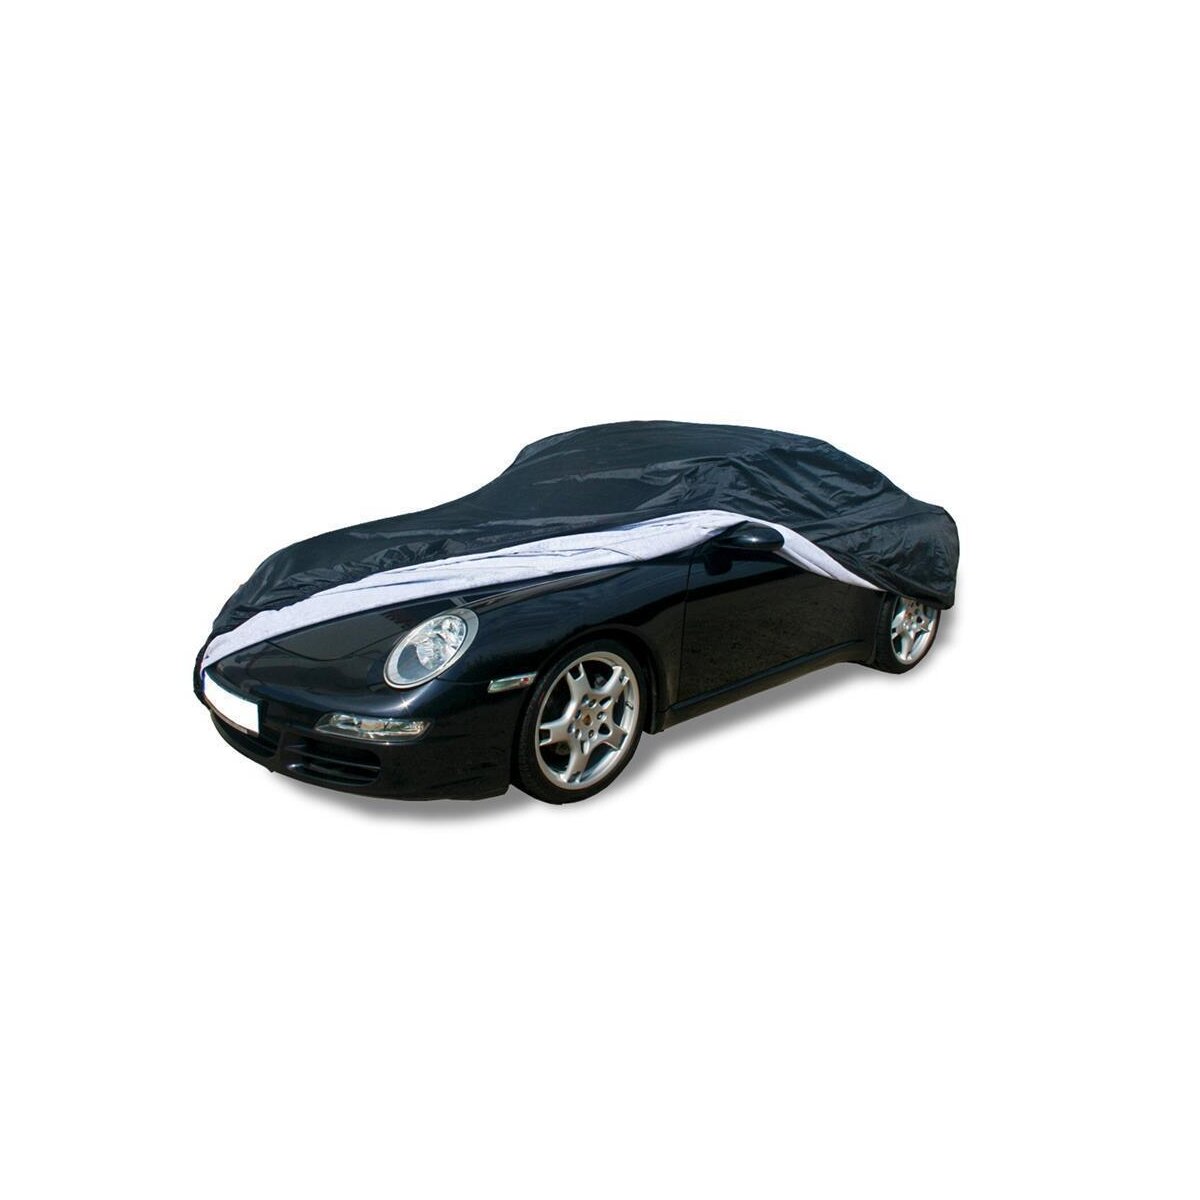 https://www.autoabdeckung.com/media/image/product/1098/lg/premium-outdoor-car-cover-autoabdeckung-fuer-jaguar-f-type.jpg